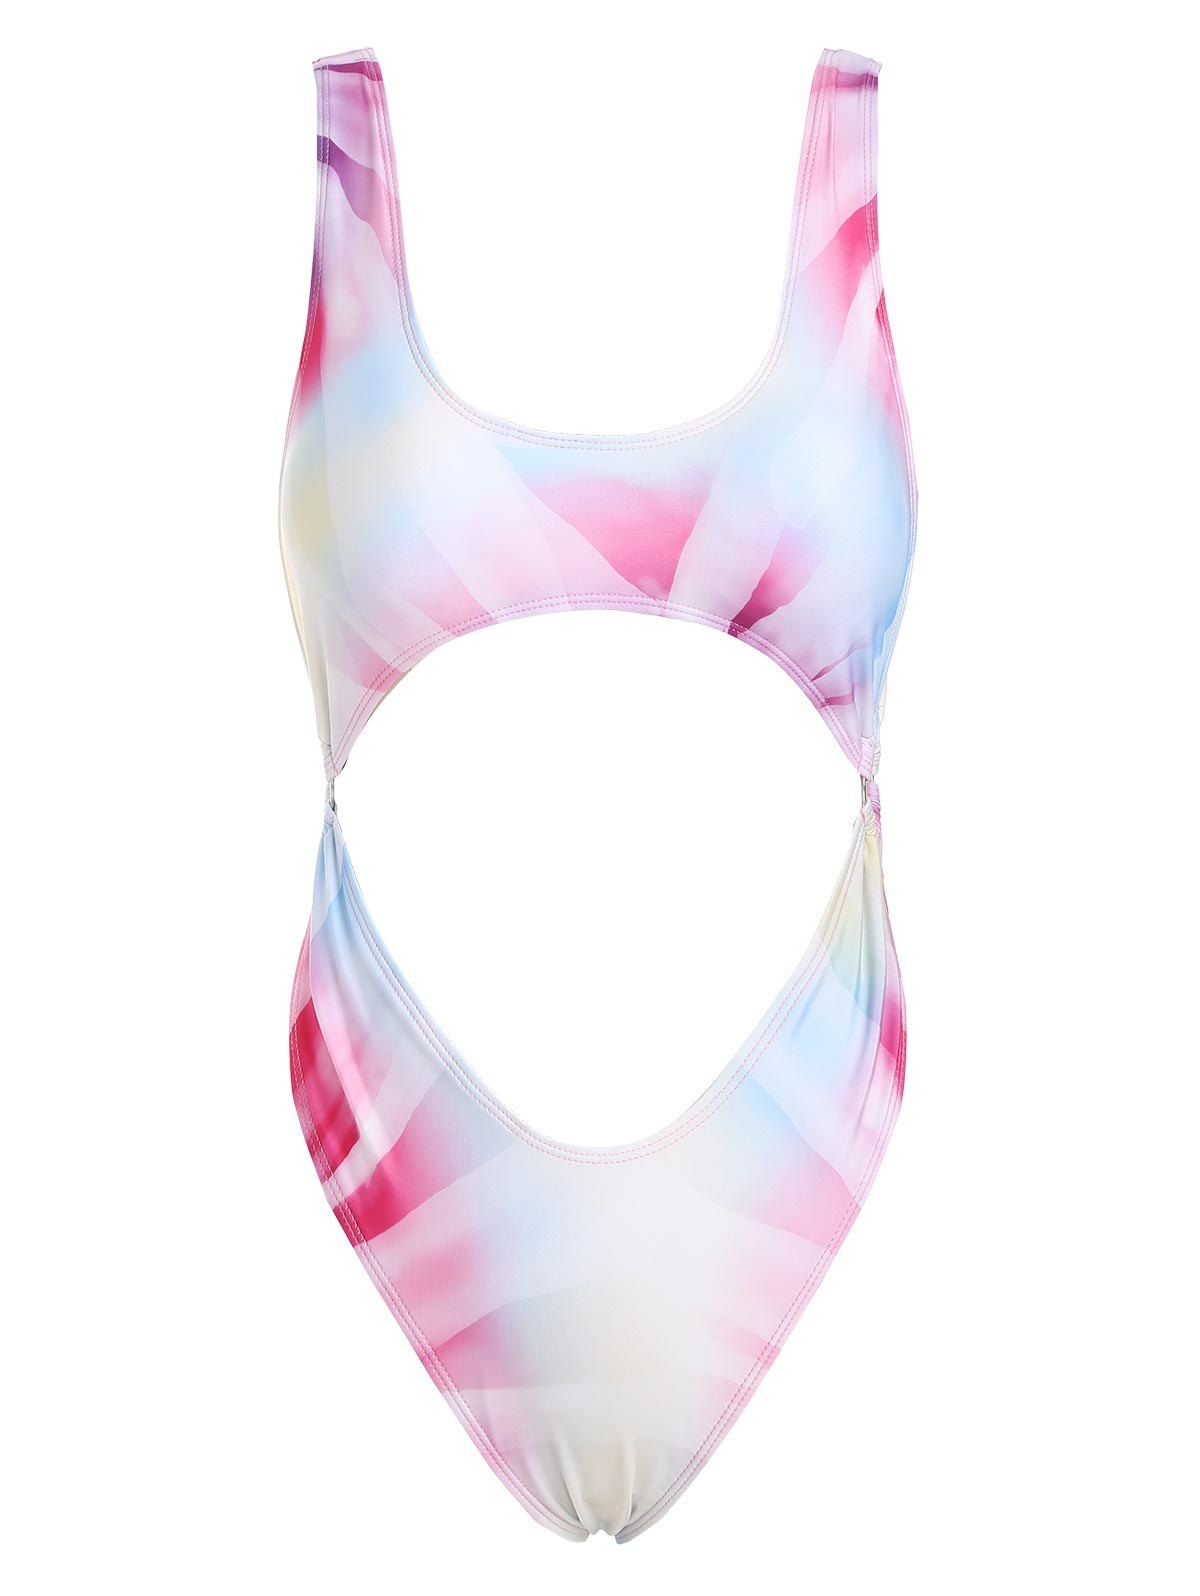 Monokini One-piece Swimsuit Tie Dye Ring Cutout High Leg One-piece Swimwear Set - LIGHT PURPLE XXL